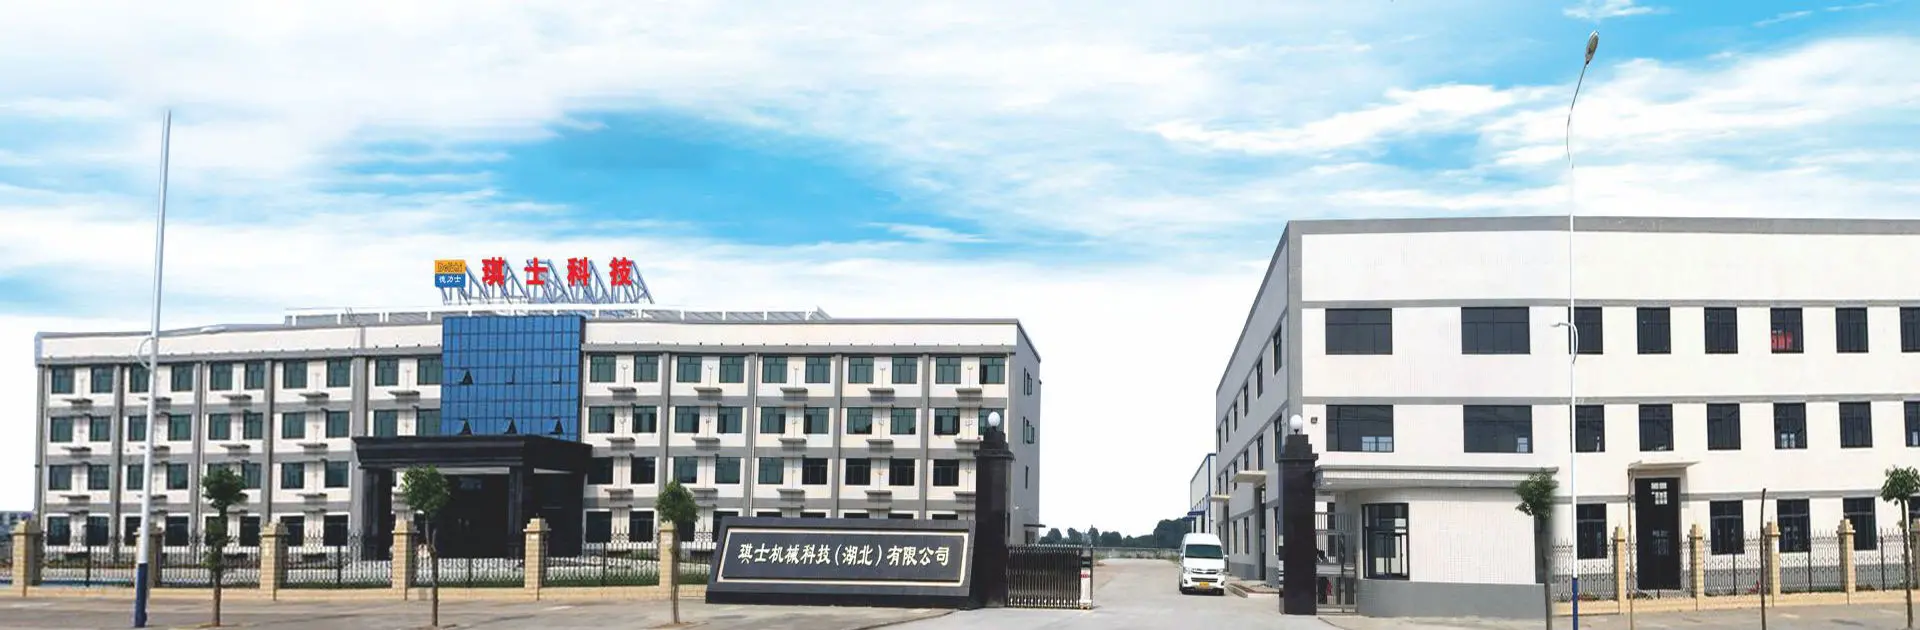 China hydraulic press machine manufacturer